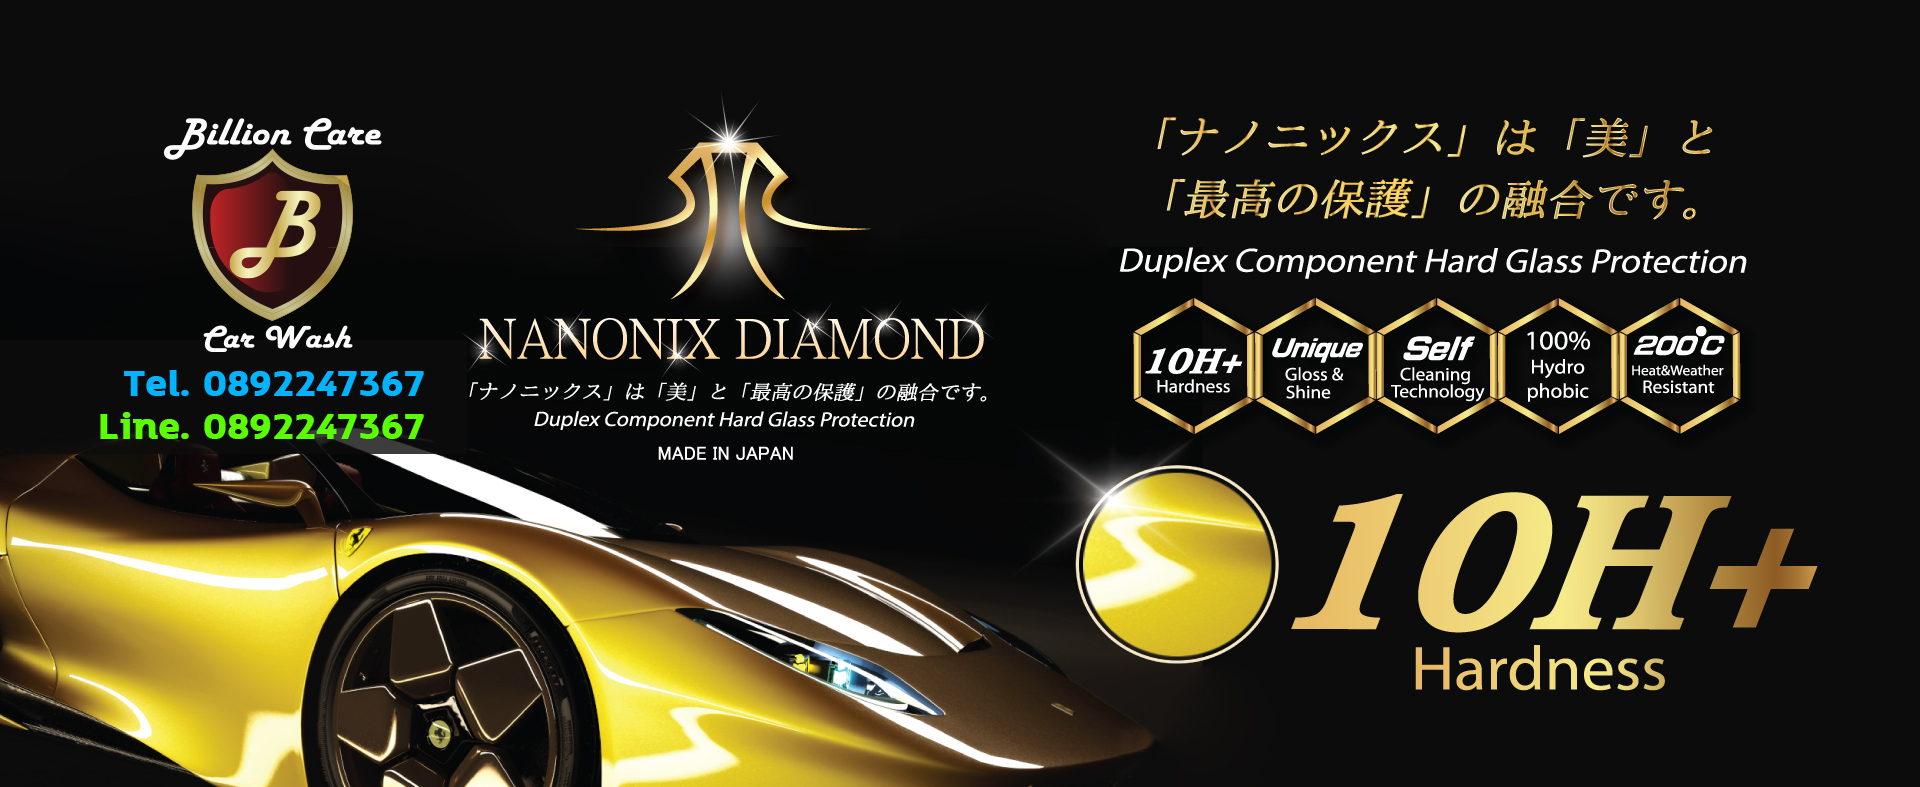 Billion Care Carwash Nanonix Diamond 10H